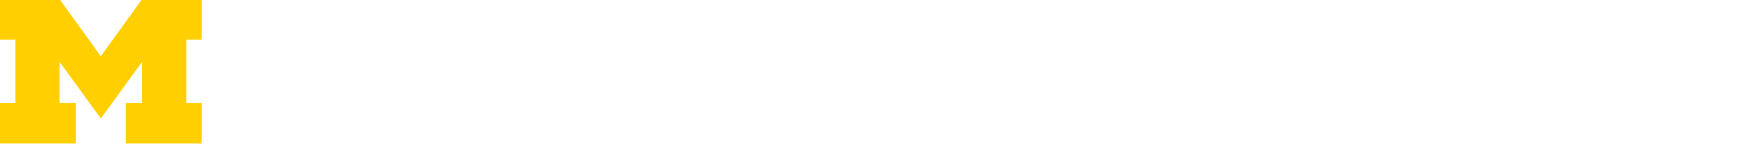 Biomedical Design and Manufacturing Lab logo